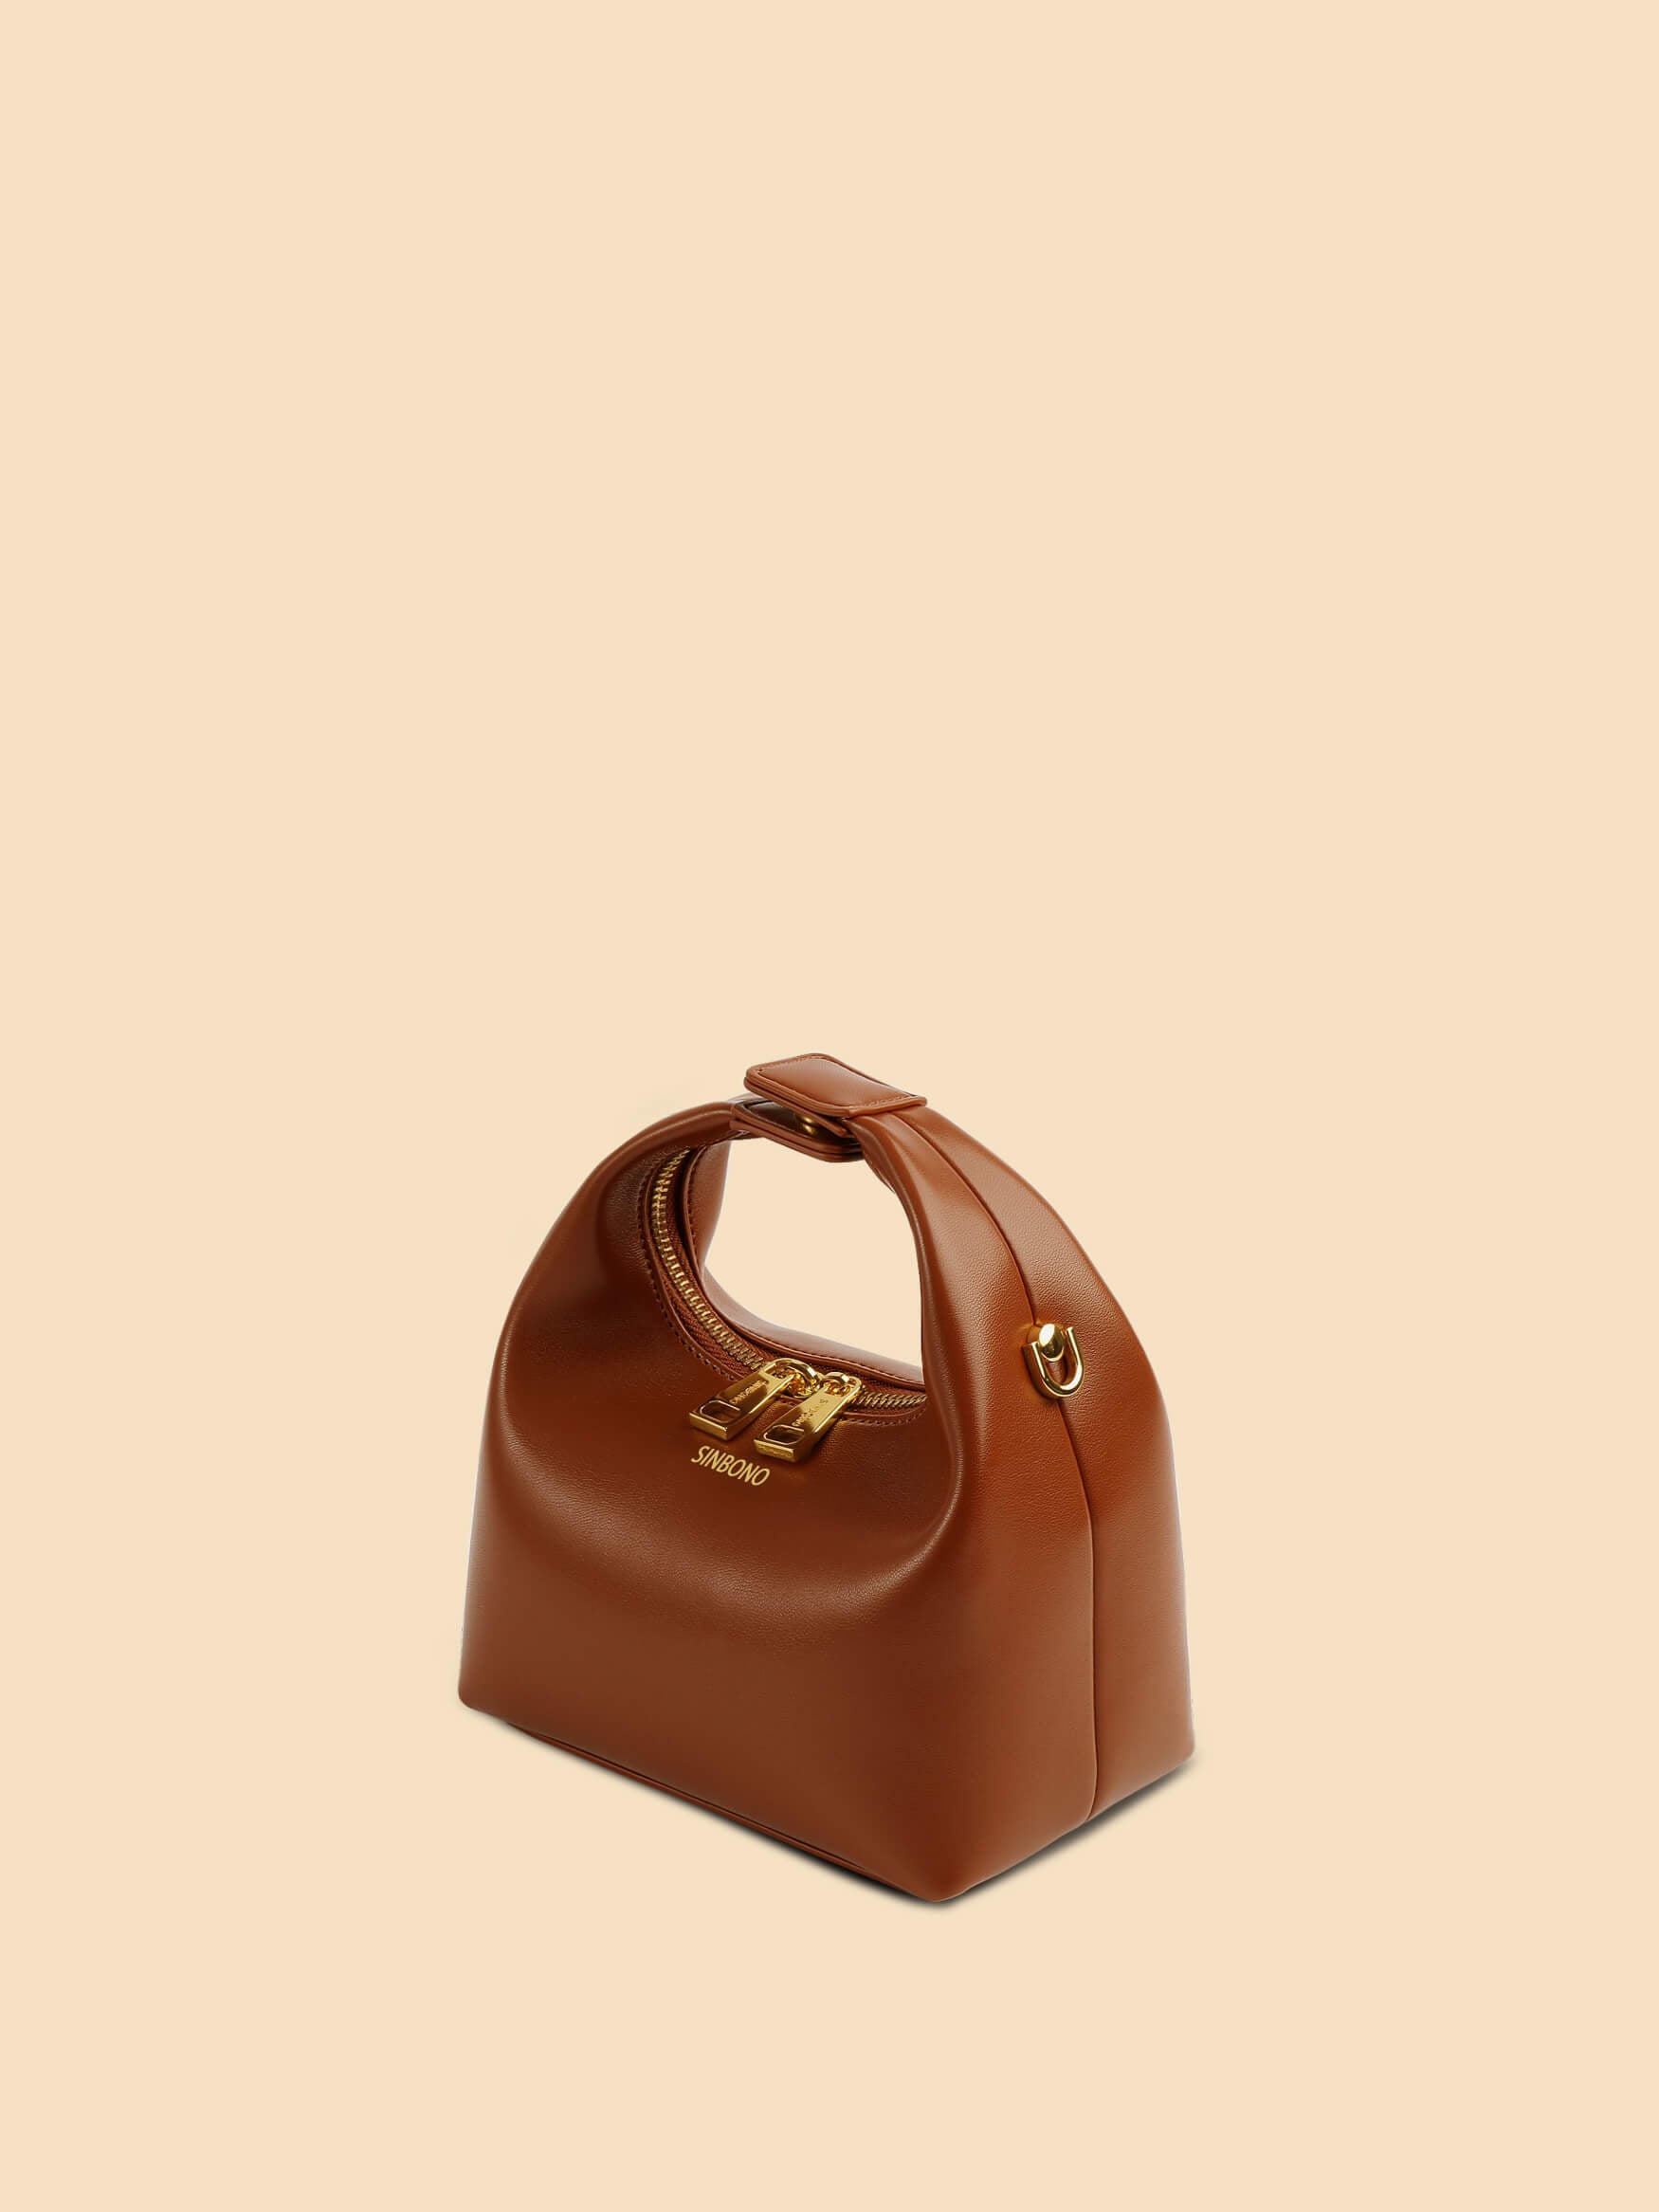 SINBONO Vienna Brown Leather Handbags -Vegan Leather Women Bag